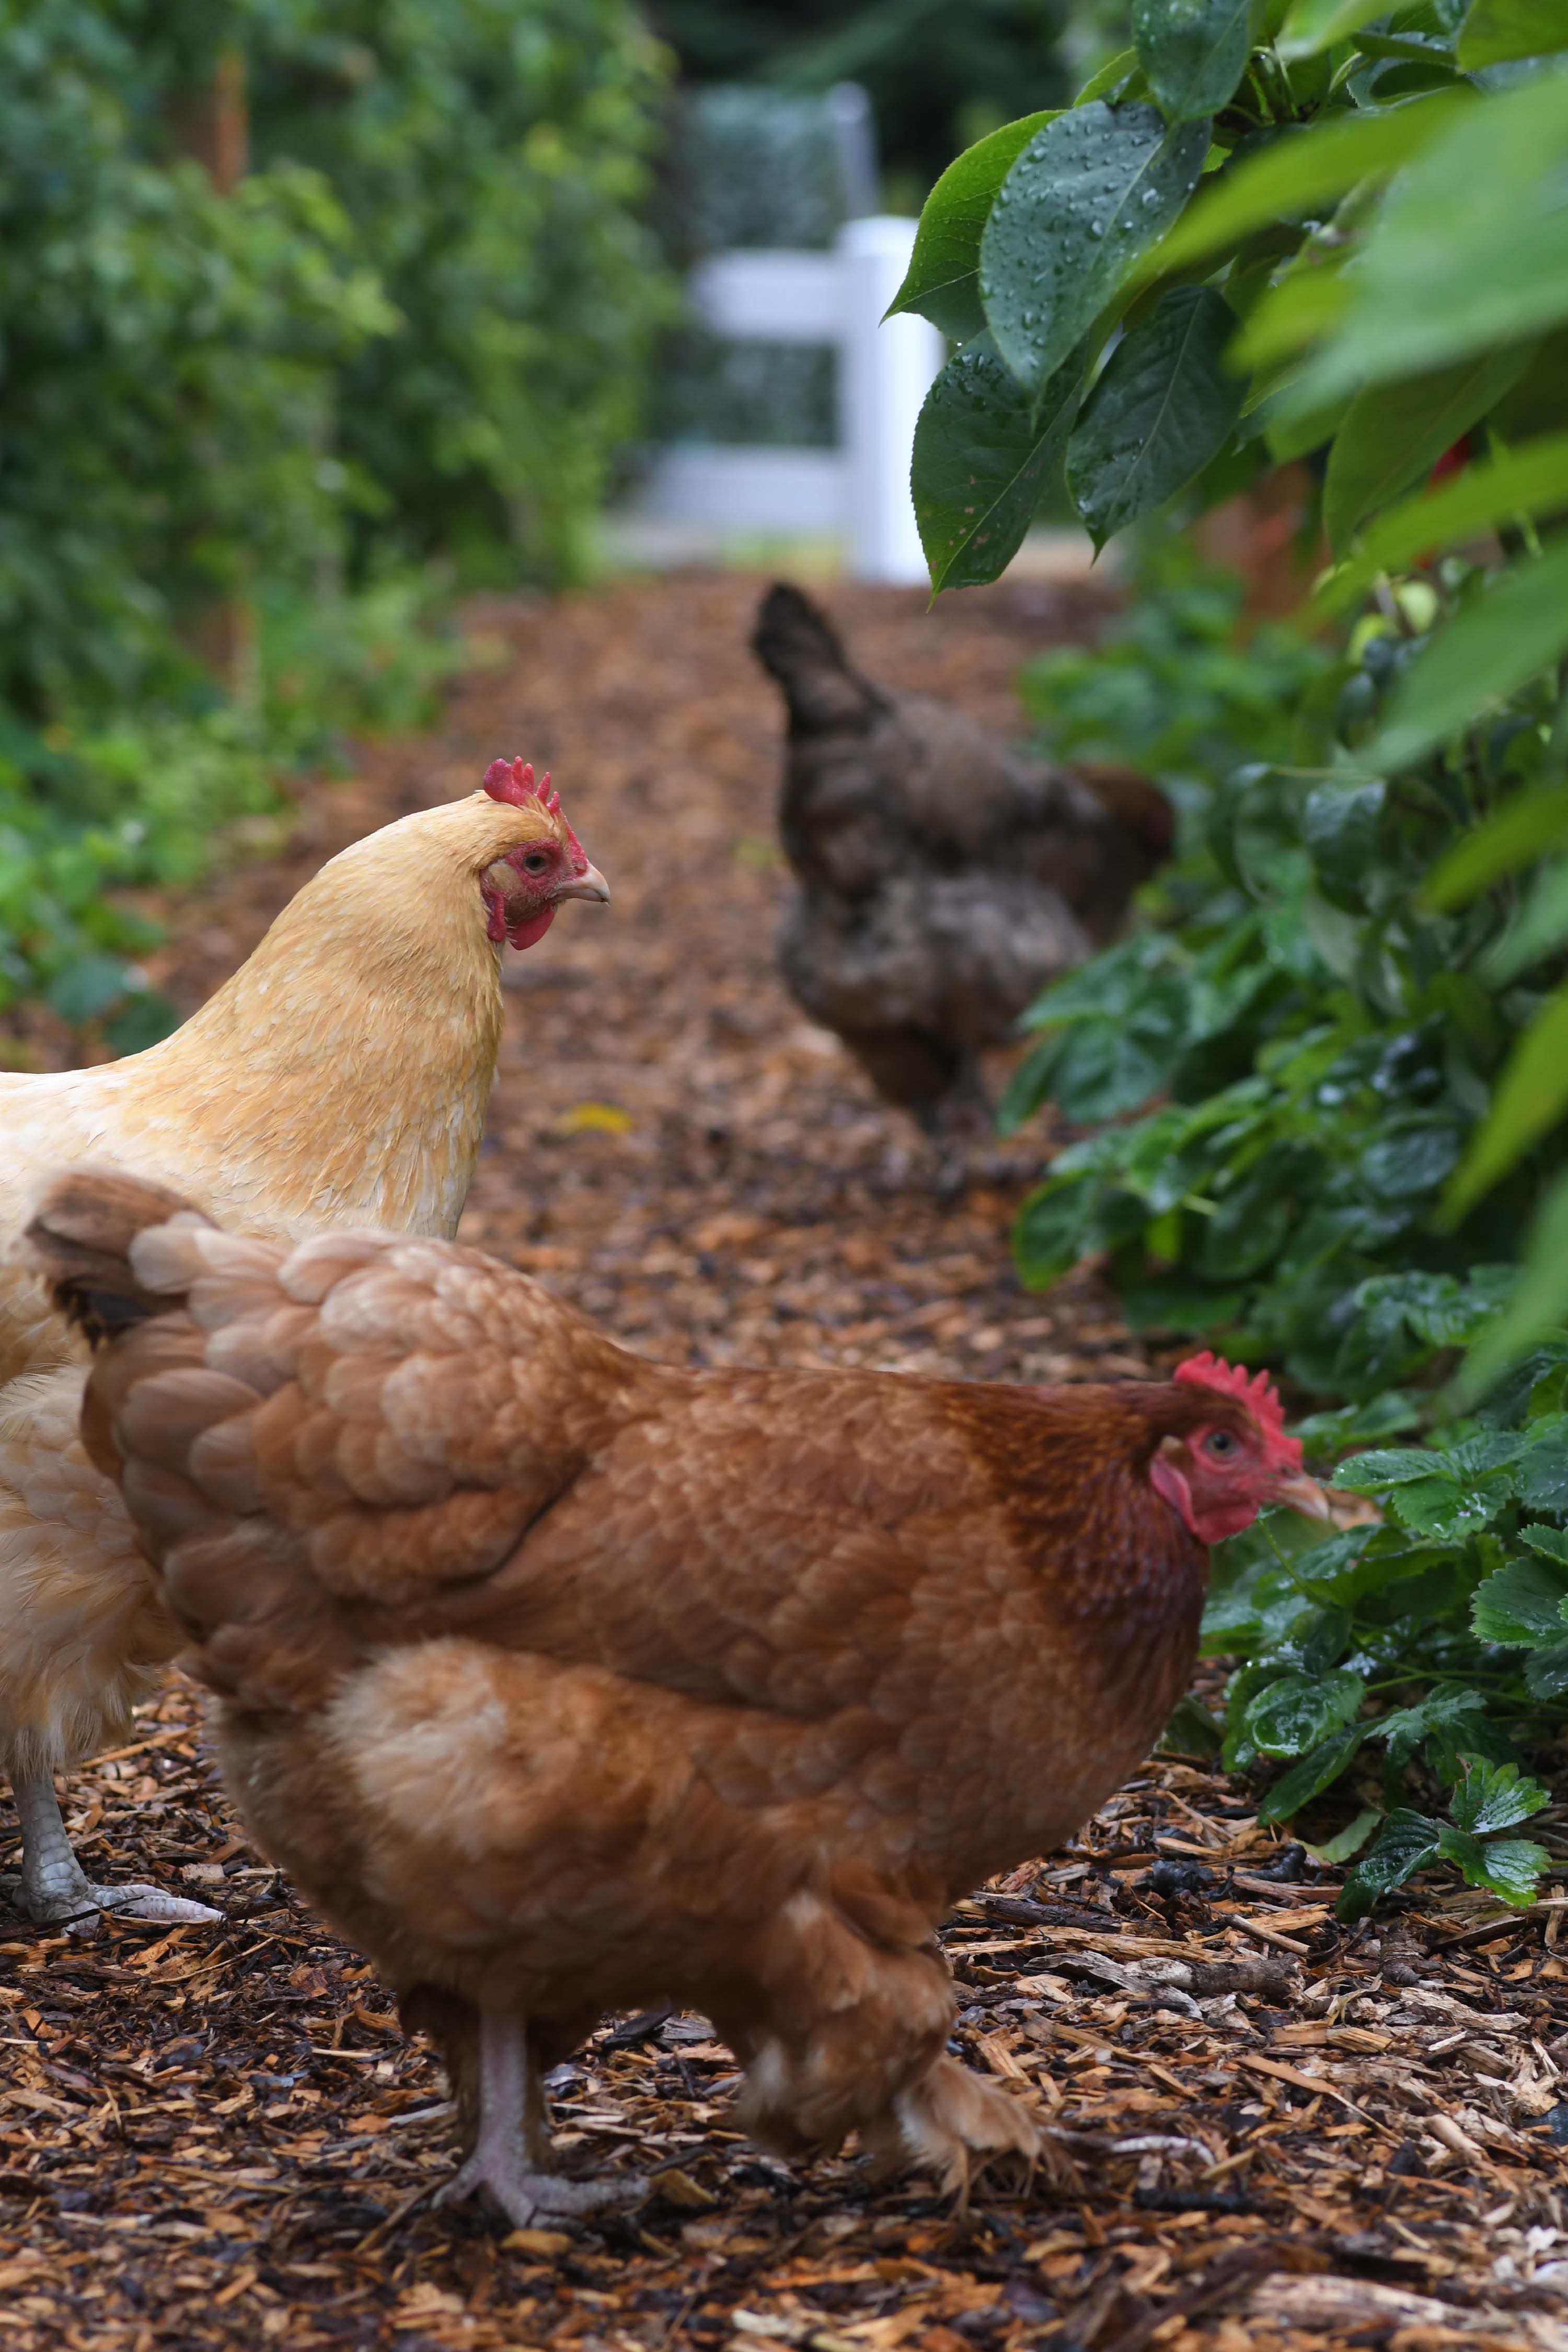 New partnership will convert chicken waste into biogas